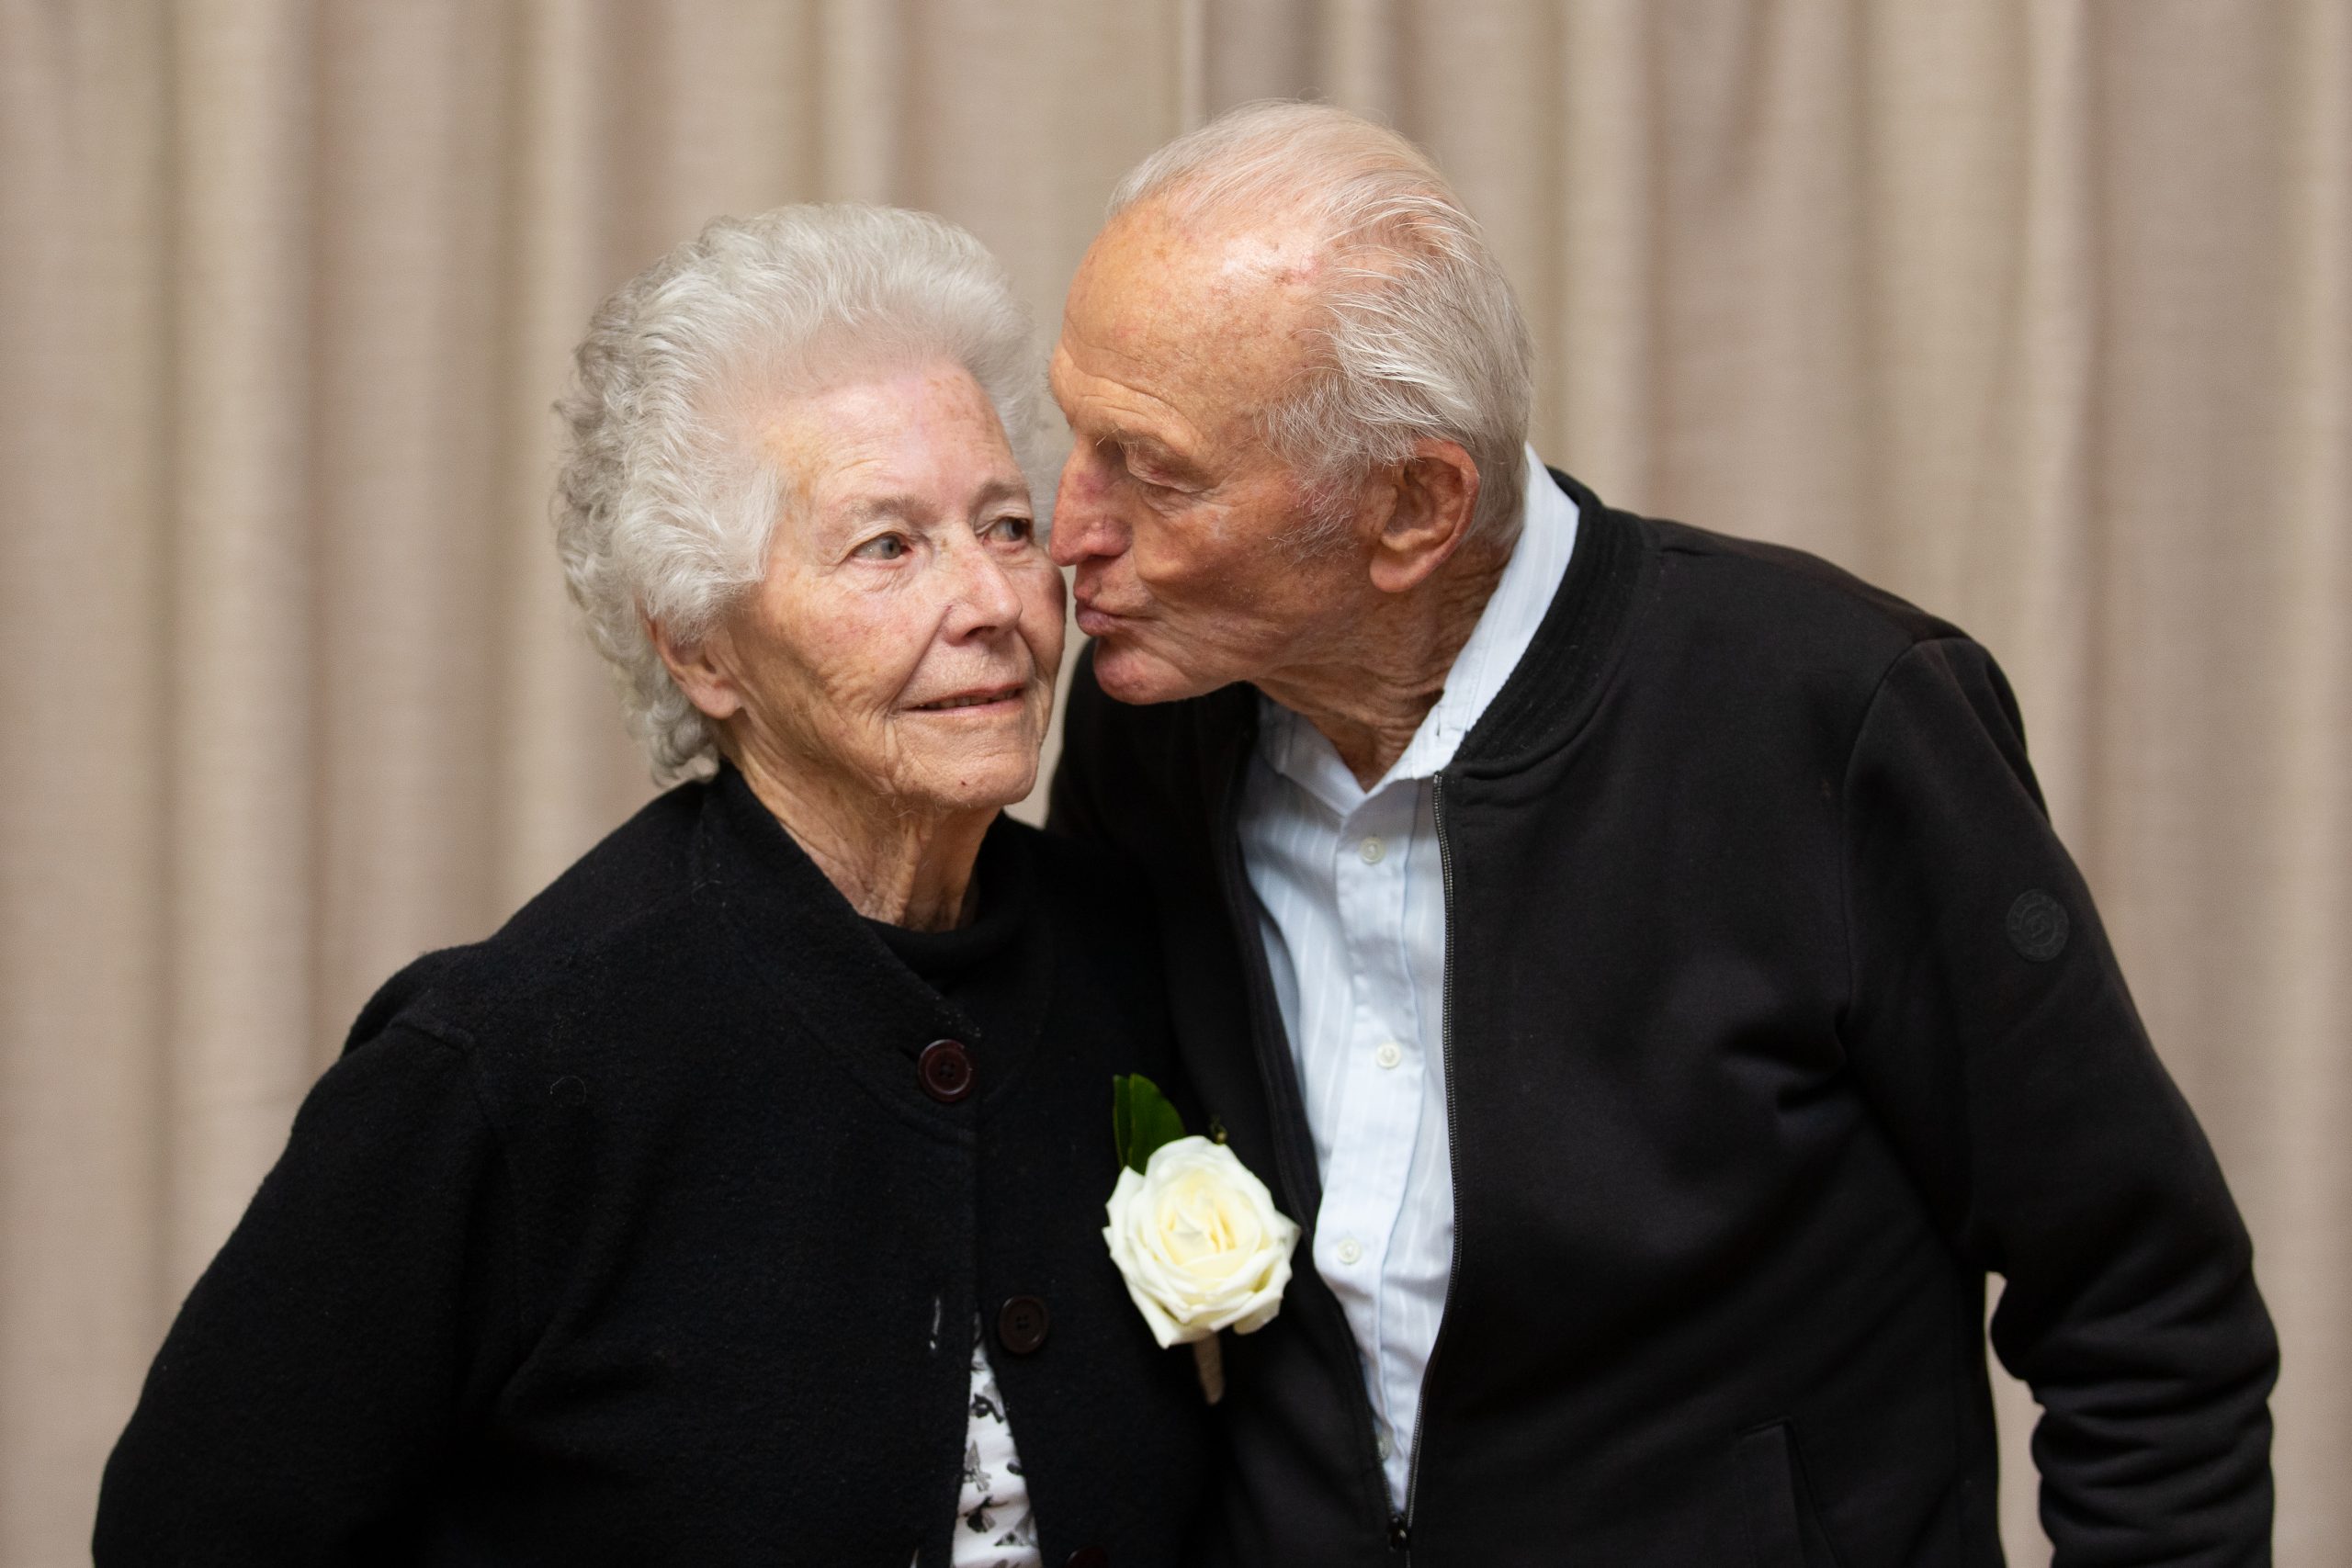 Norma and Frank Hadley celebrate 70th wedding anniversary. Photo credit: John Burgess photography.